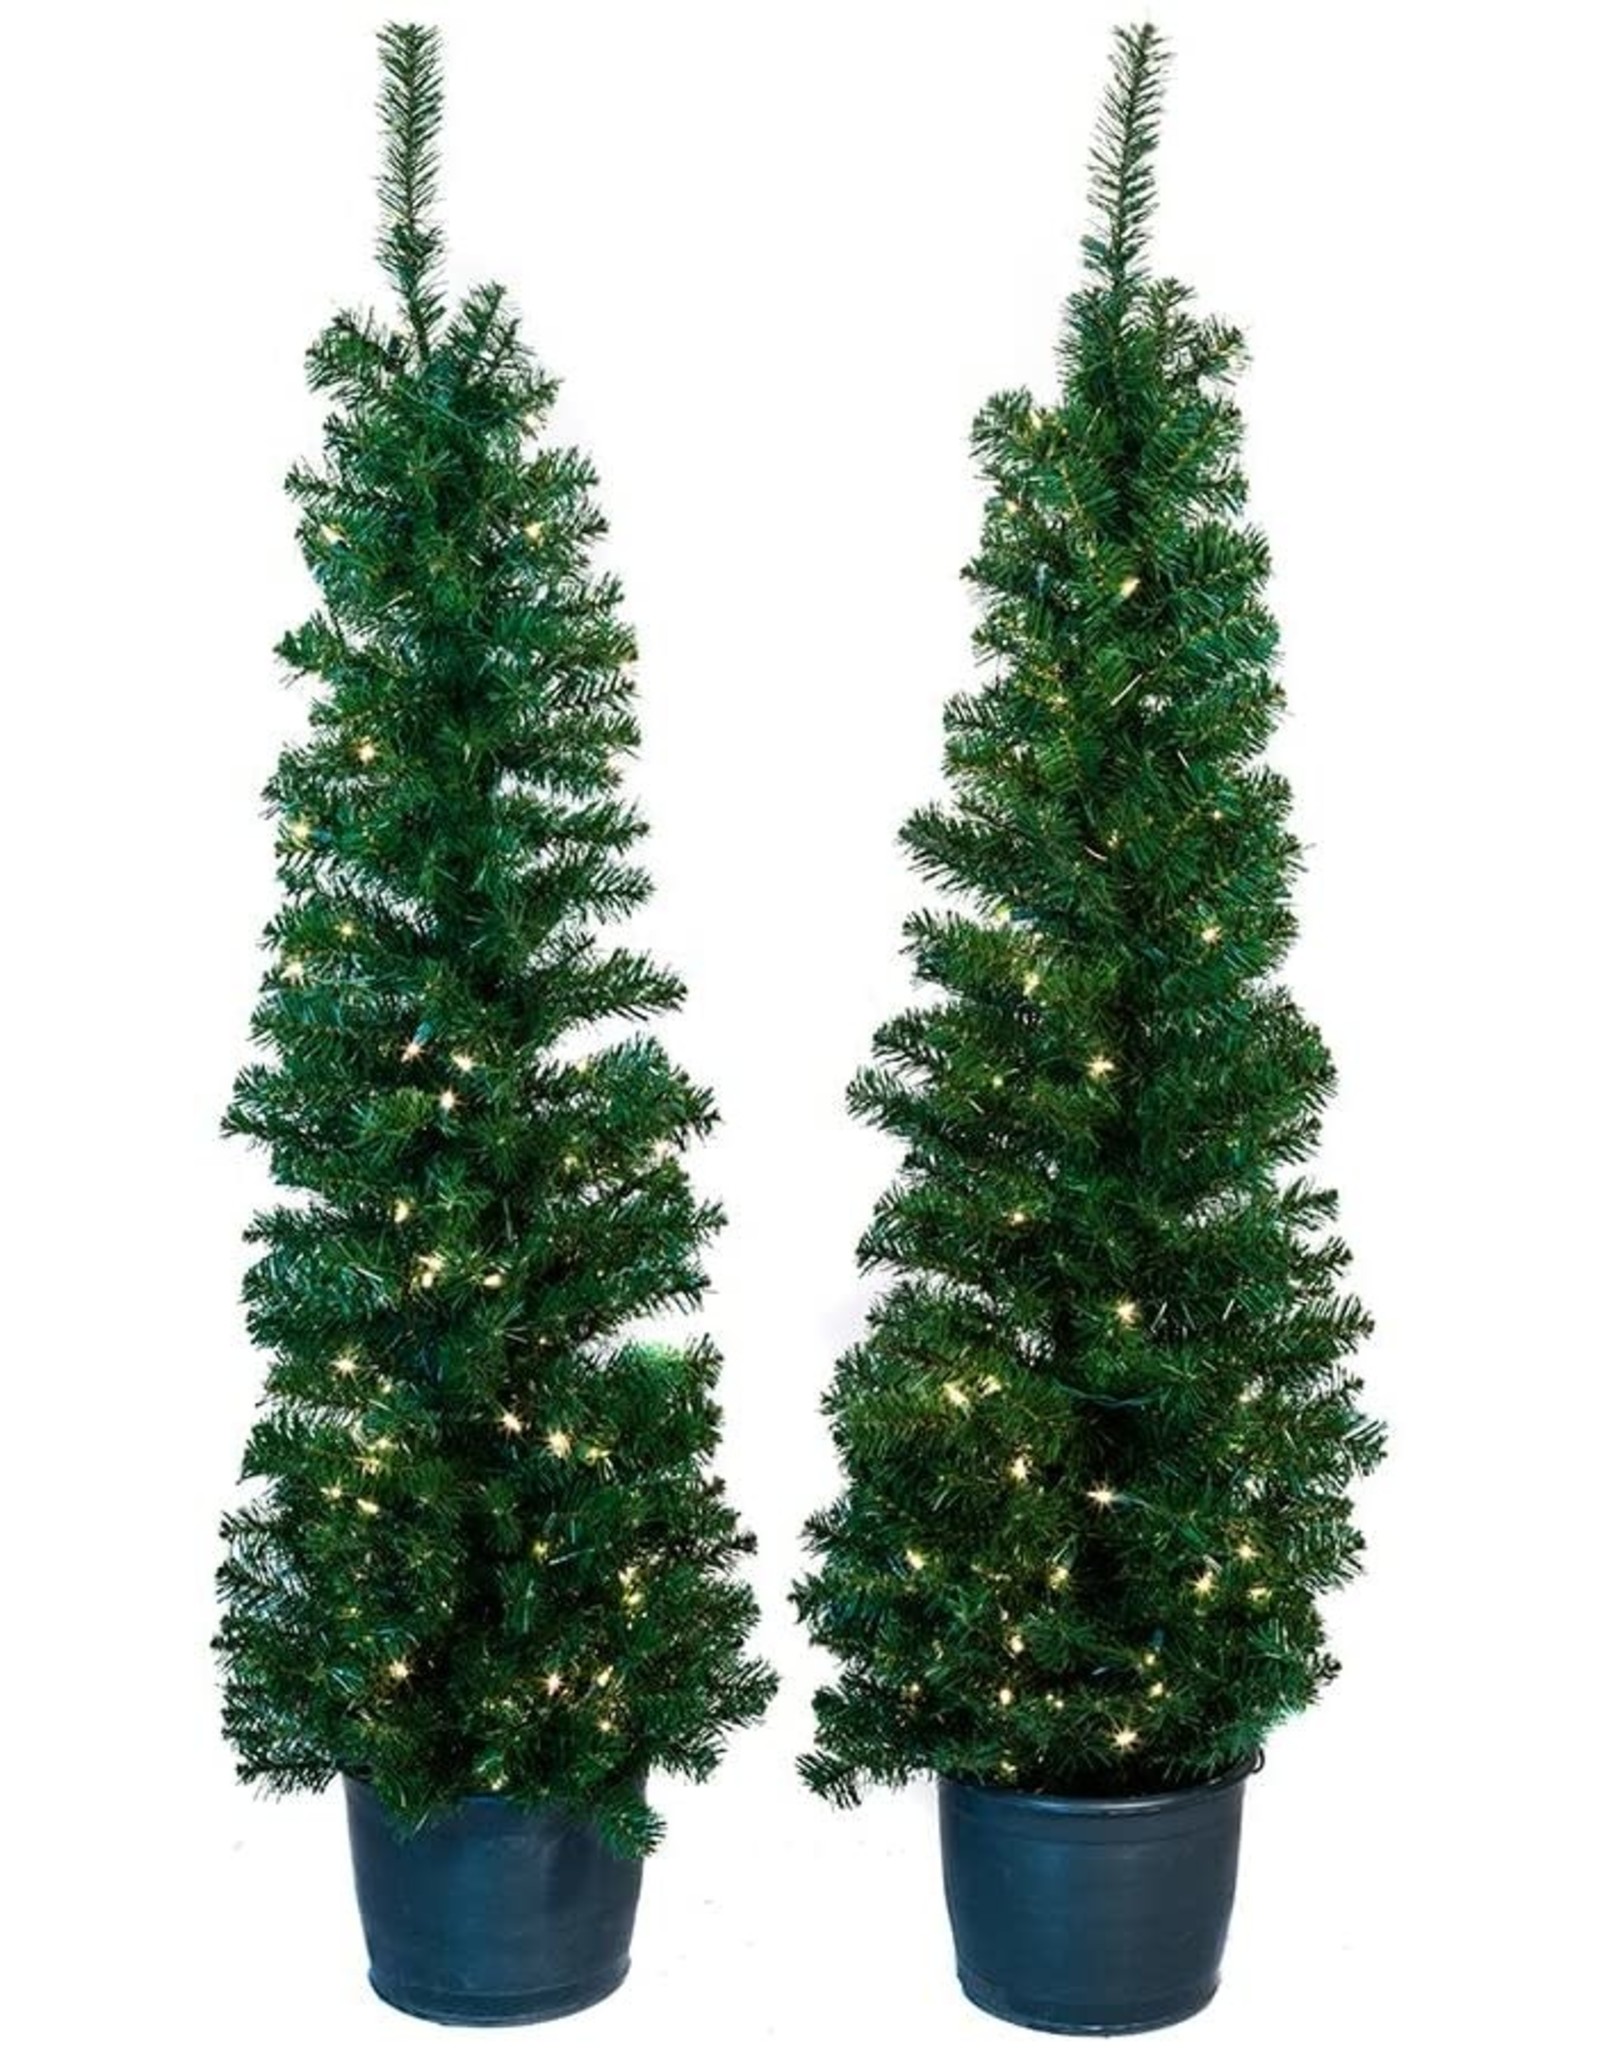 Kurt Adler Christmas Tree Set of 2 Pre-Lit 5 FT Potted Trees - Clear lights